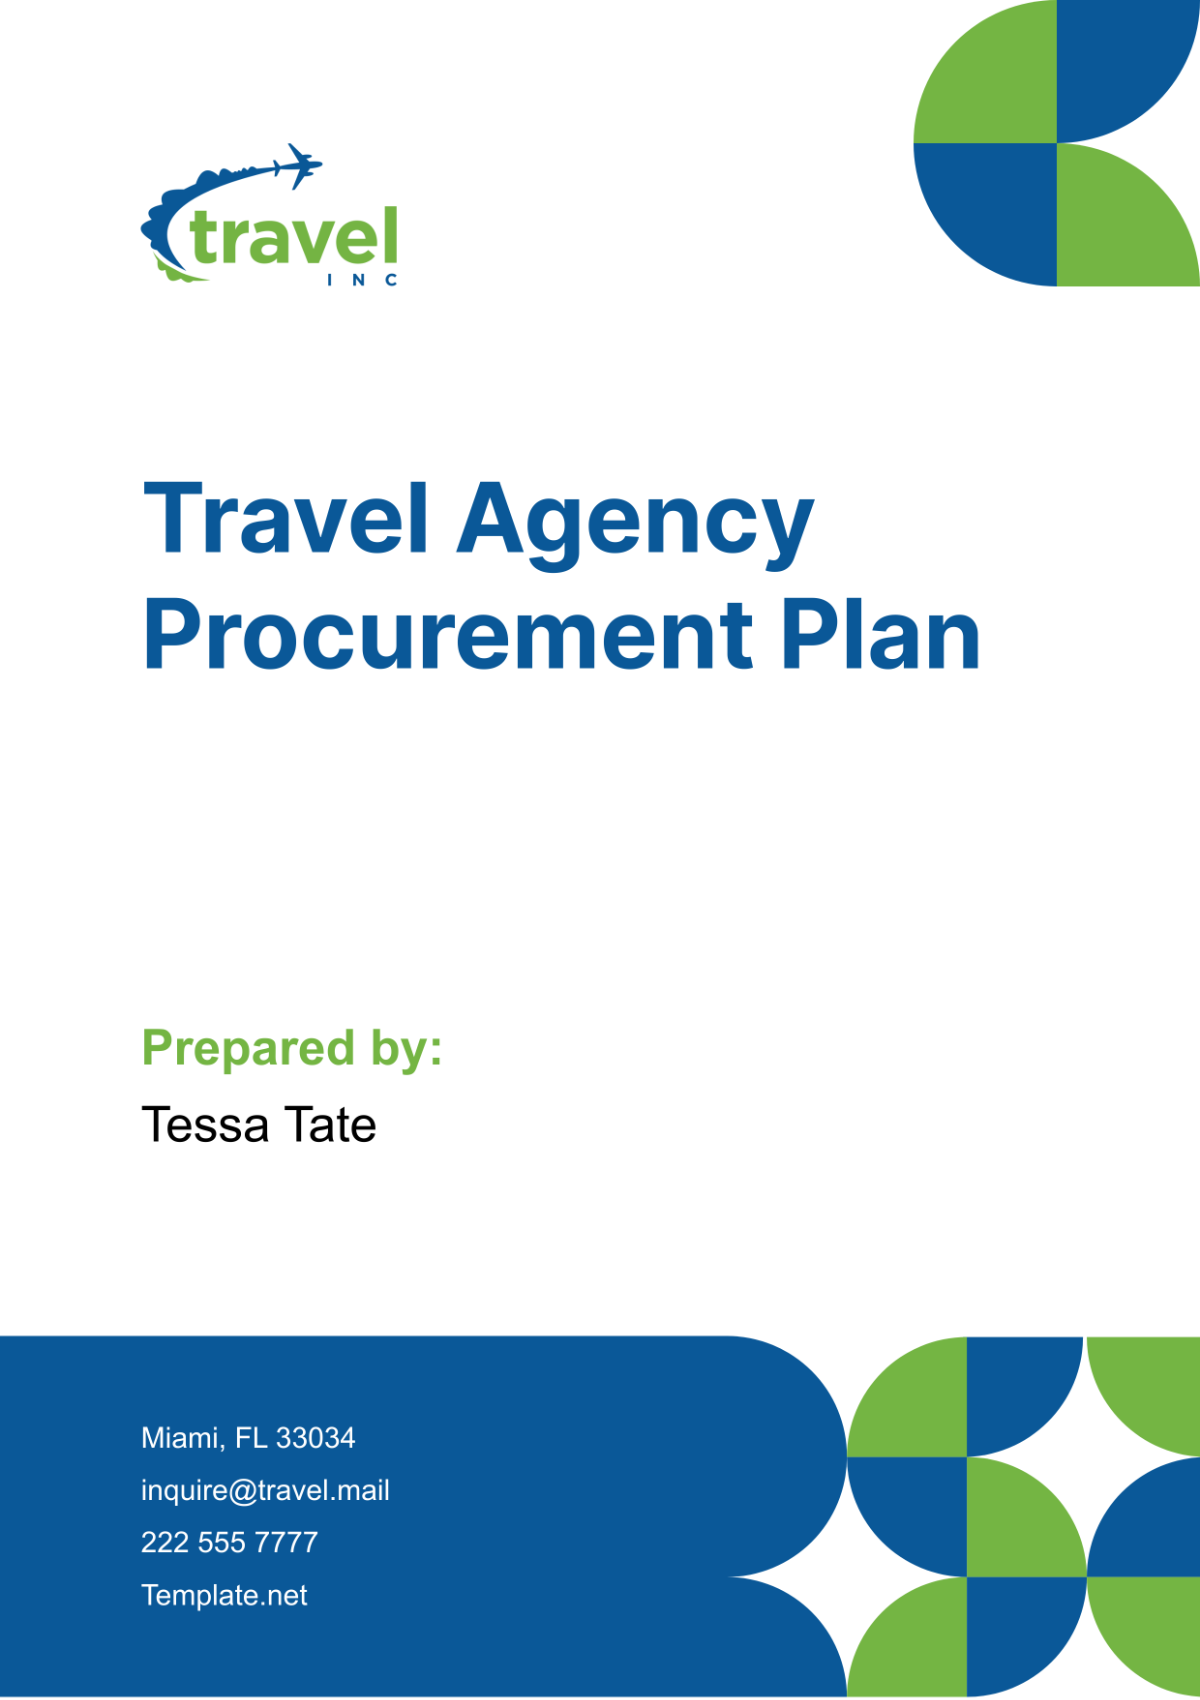 Travel Agency Procurement Plan Template